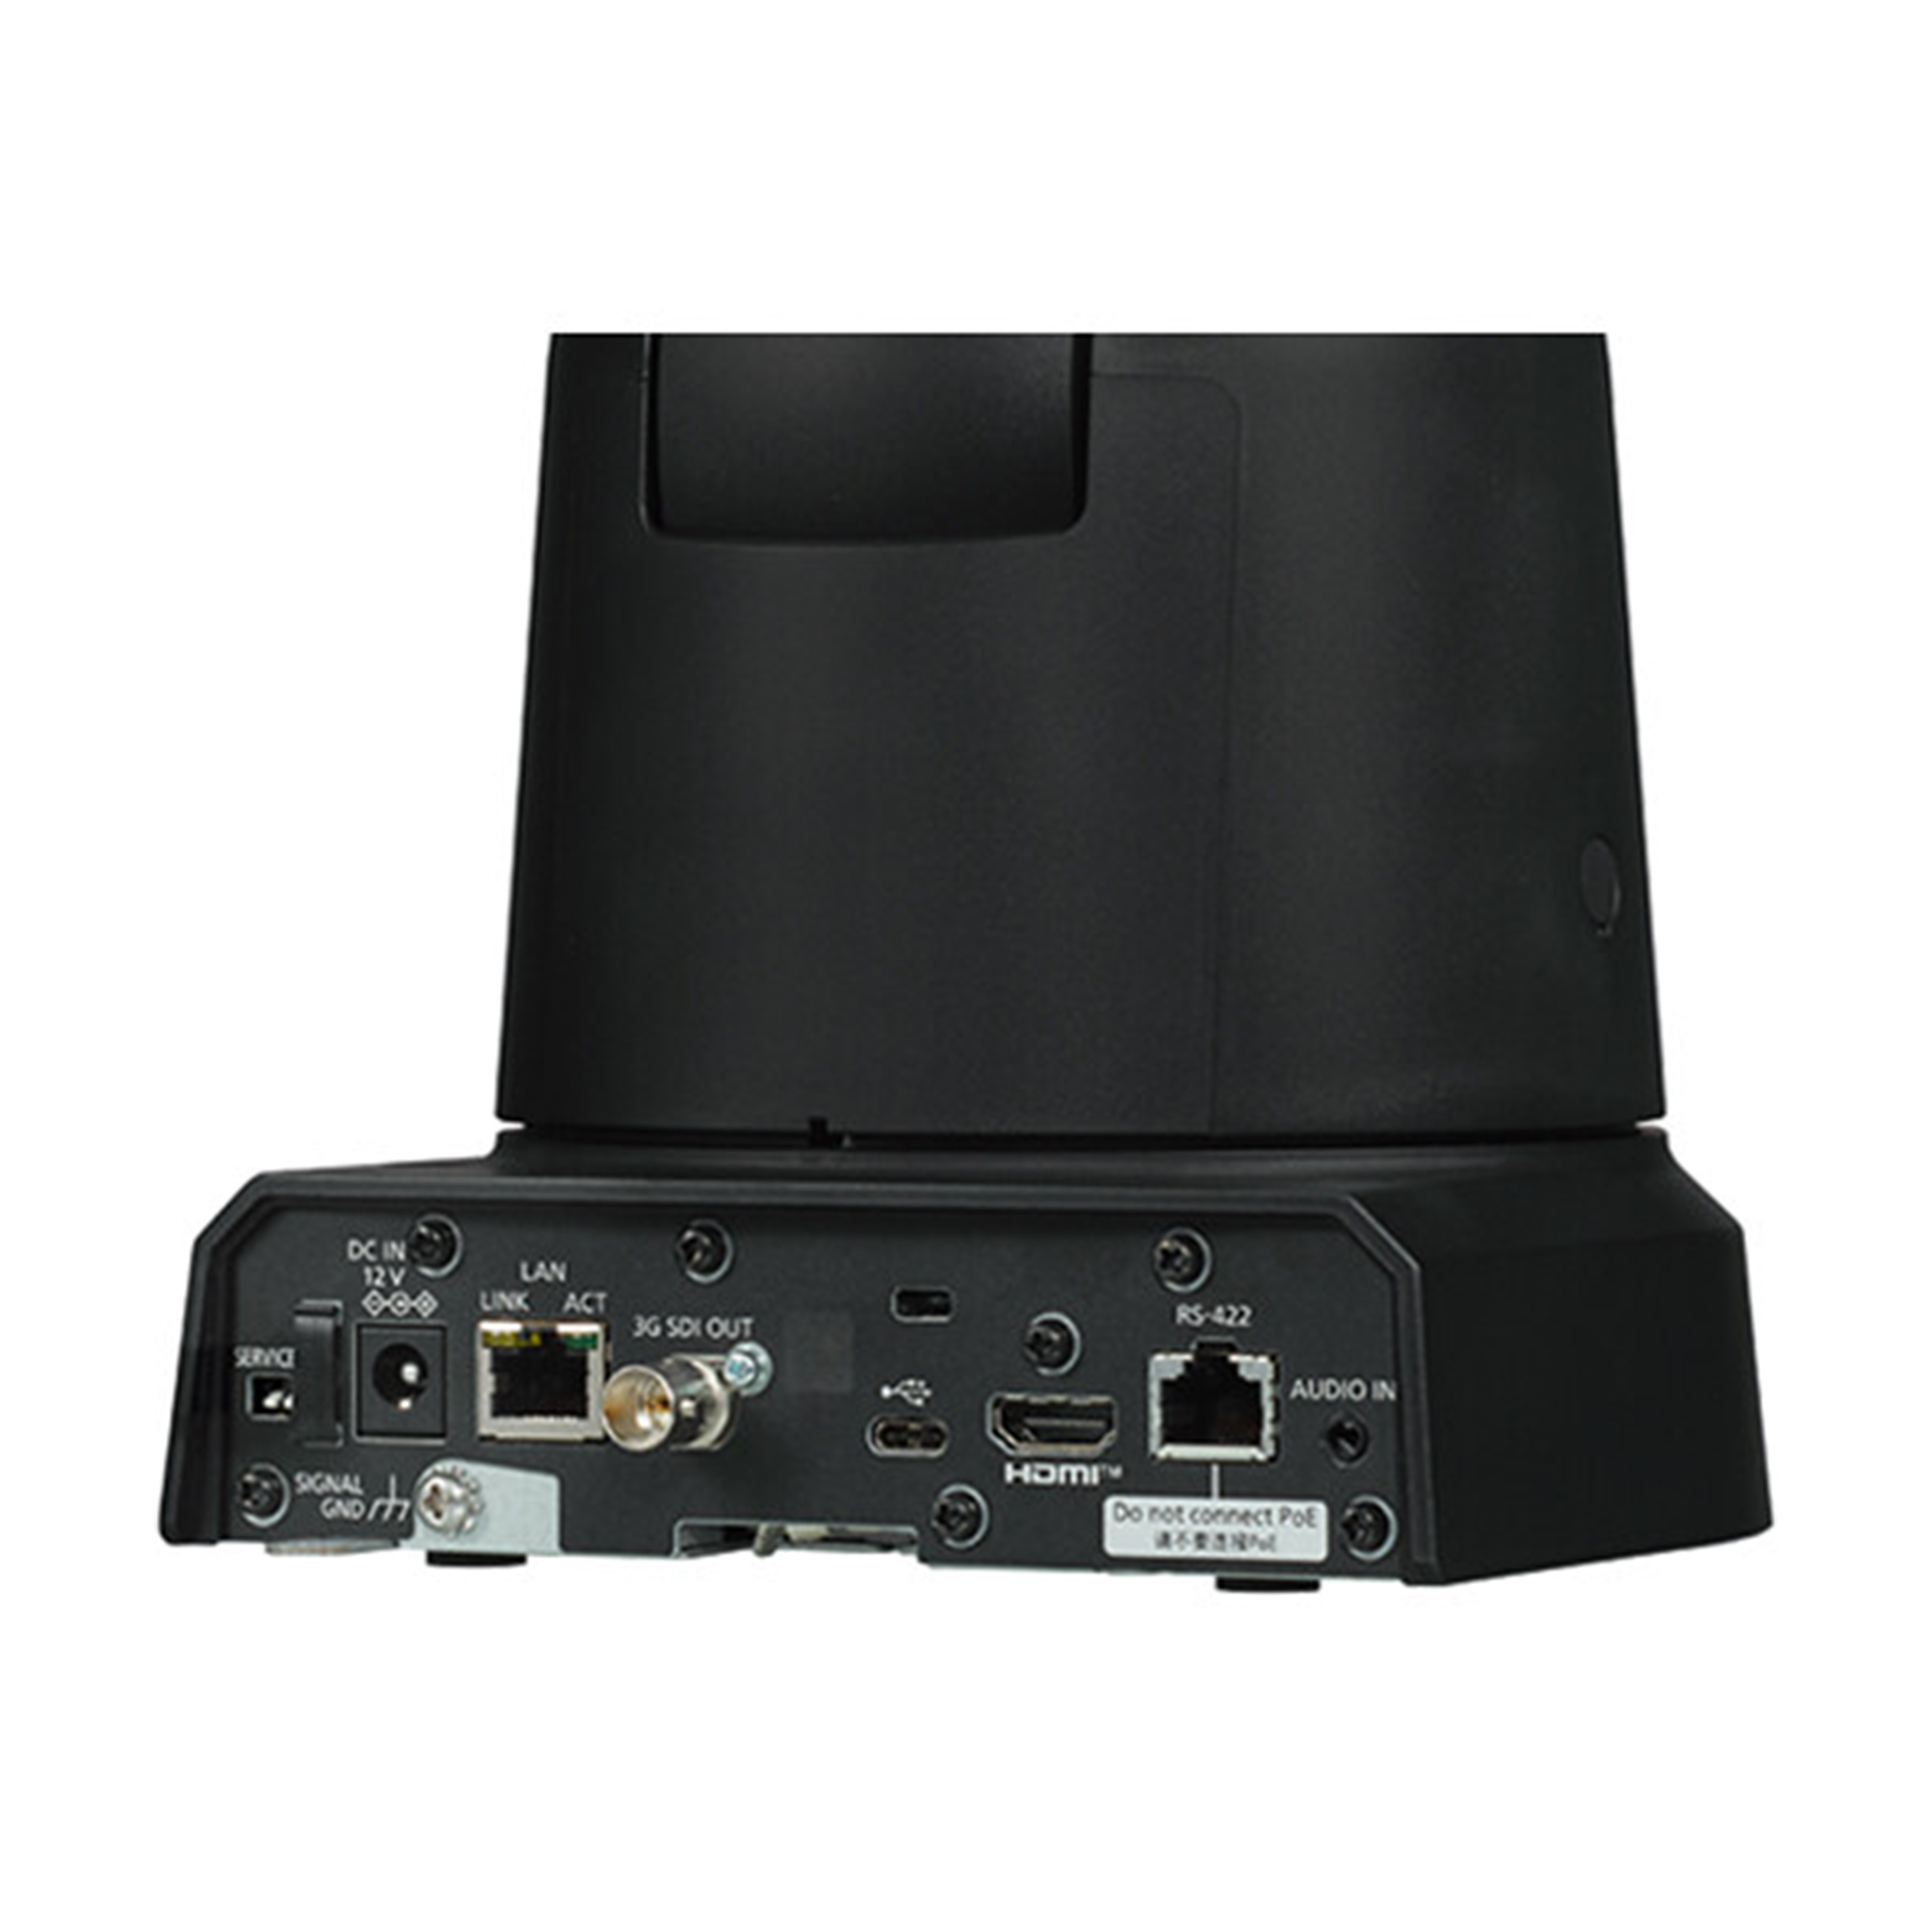 Panasonic UE50 4K30 SDI/HDMI PTZ Camera with 24x Optical Zoom (Black)